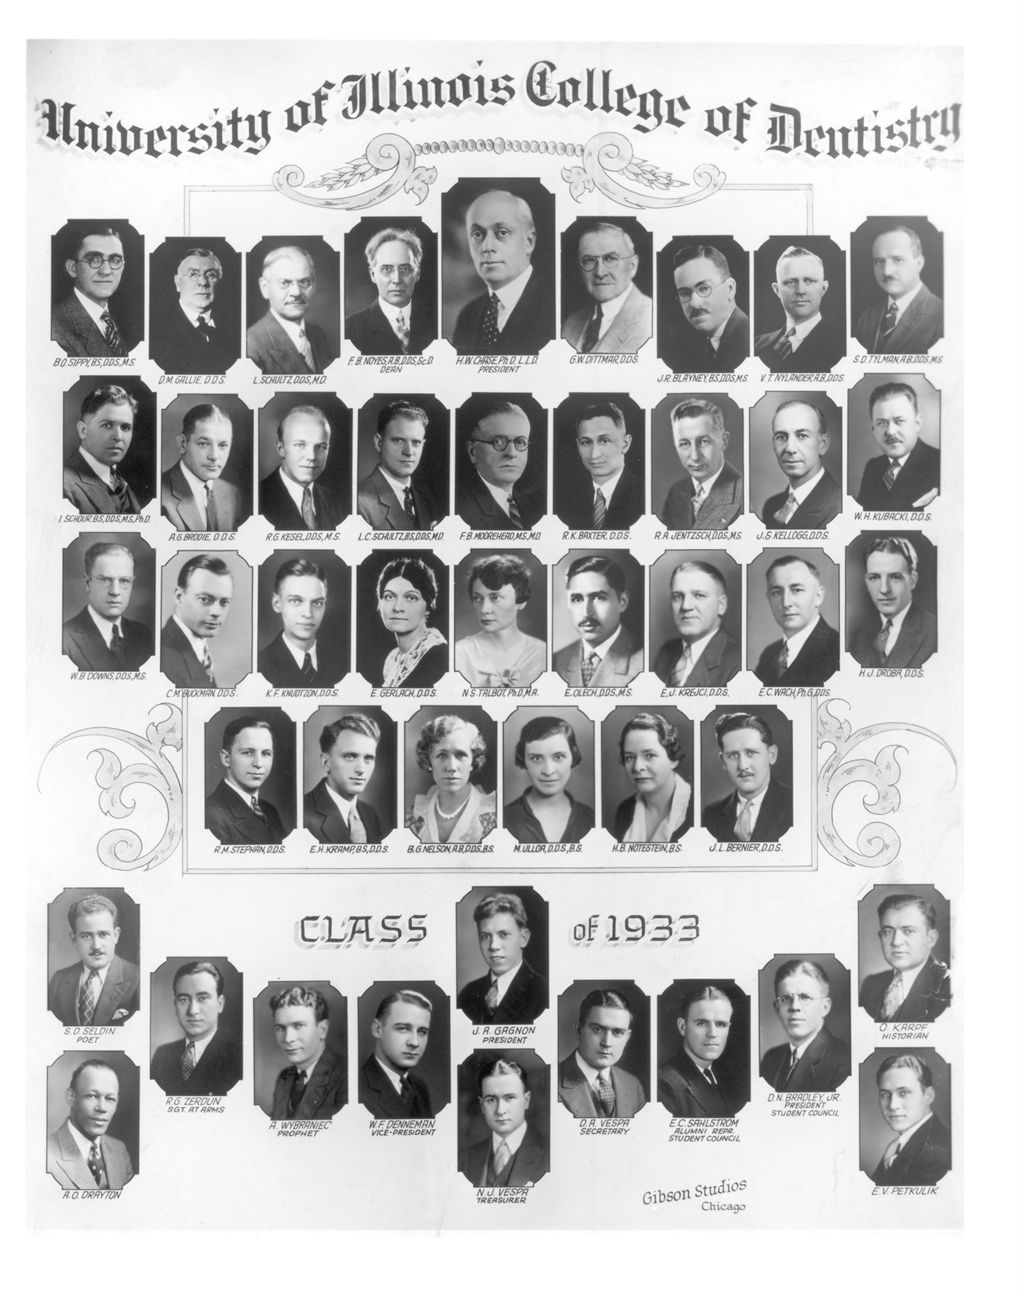 1933 graduating class, University of Illinois College of Dentistry